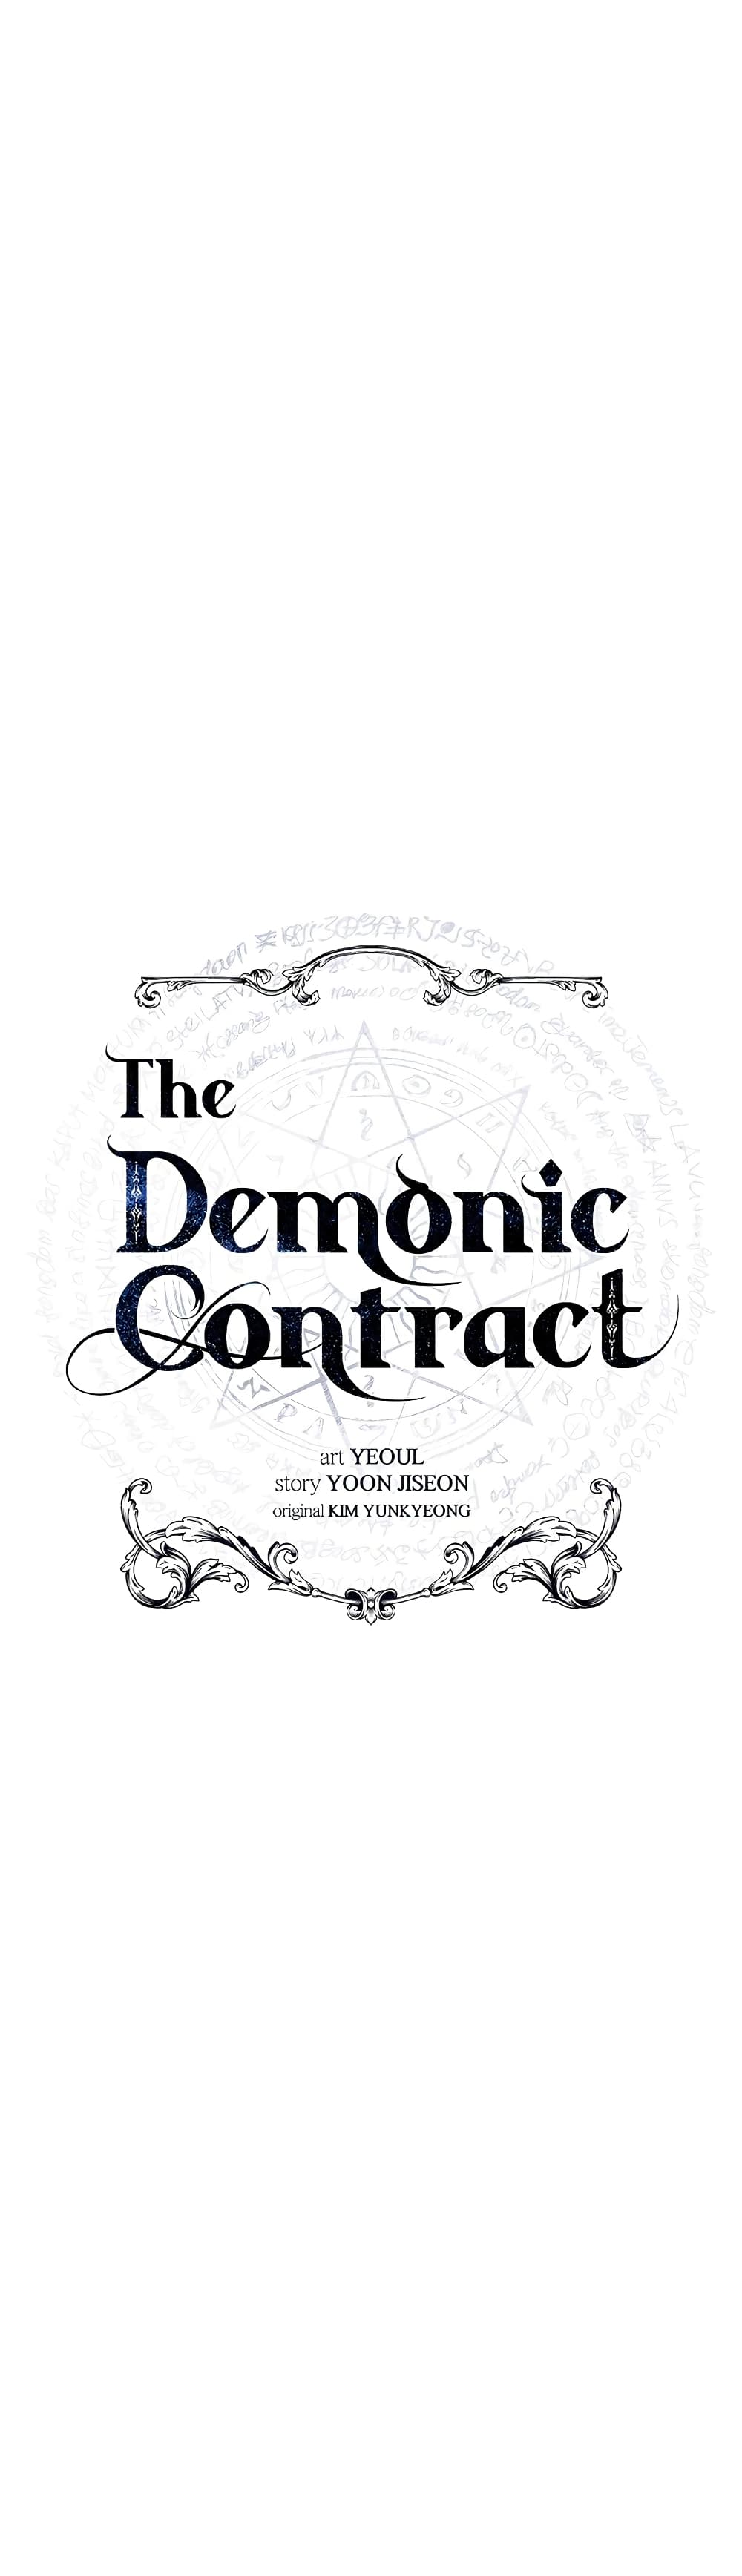 The Demonic Contract 53-53